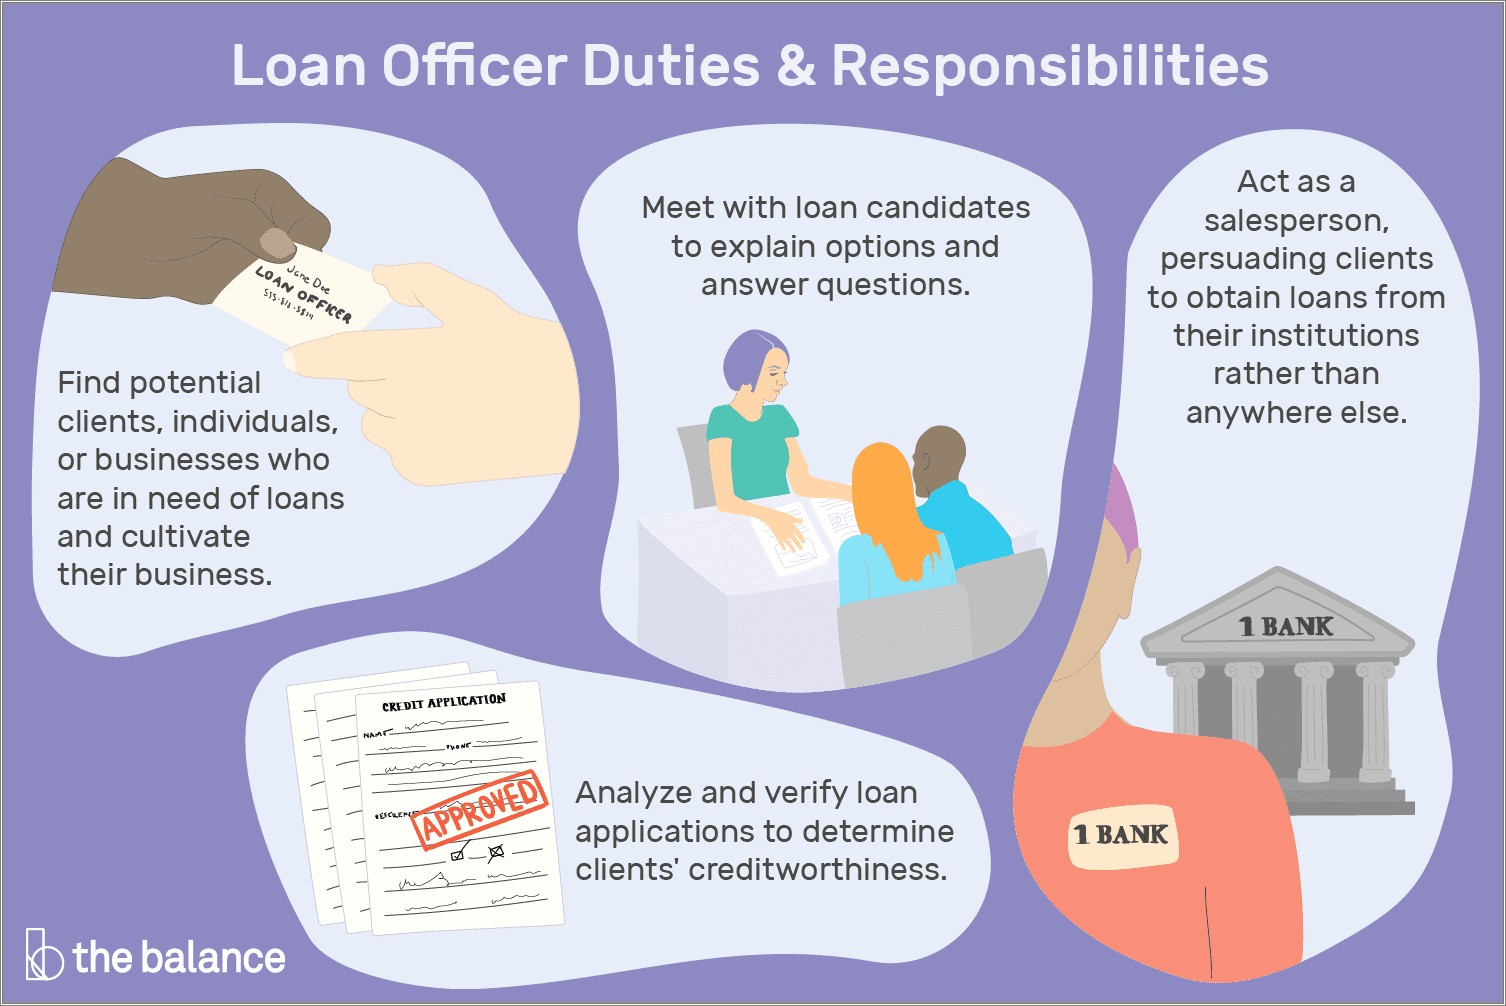 Senior Credit Officer Job Description Resume